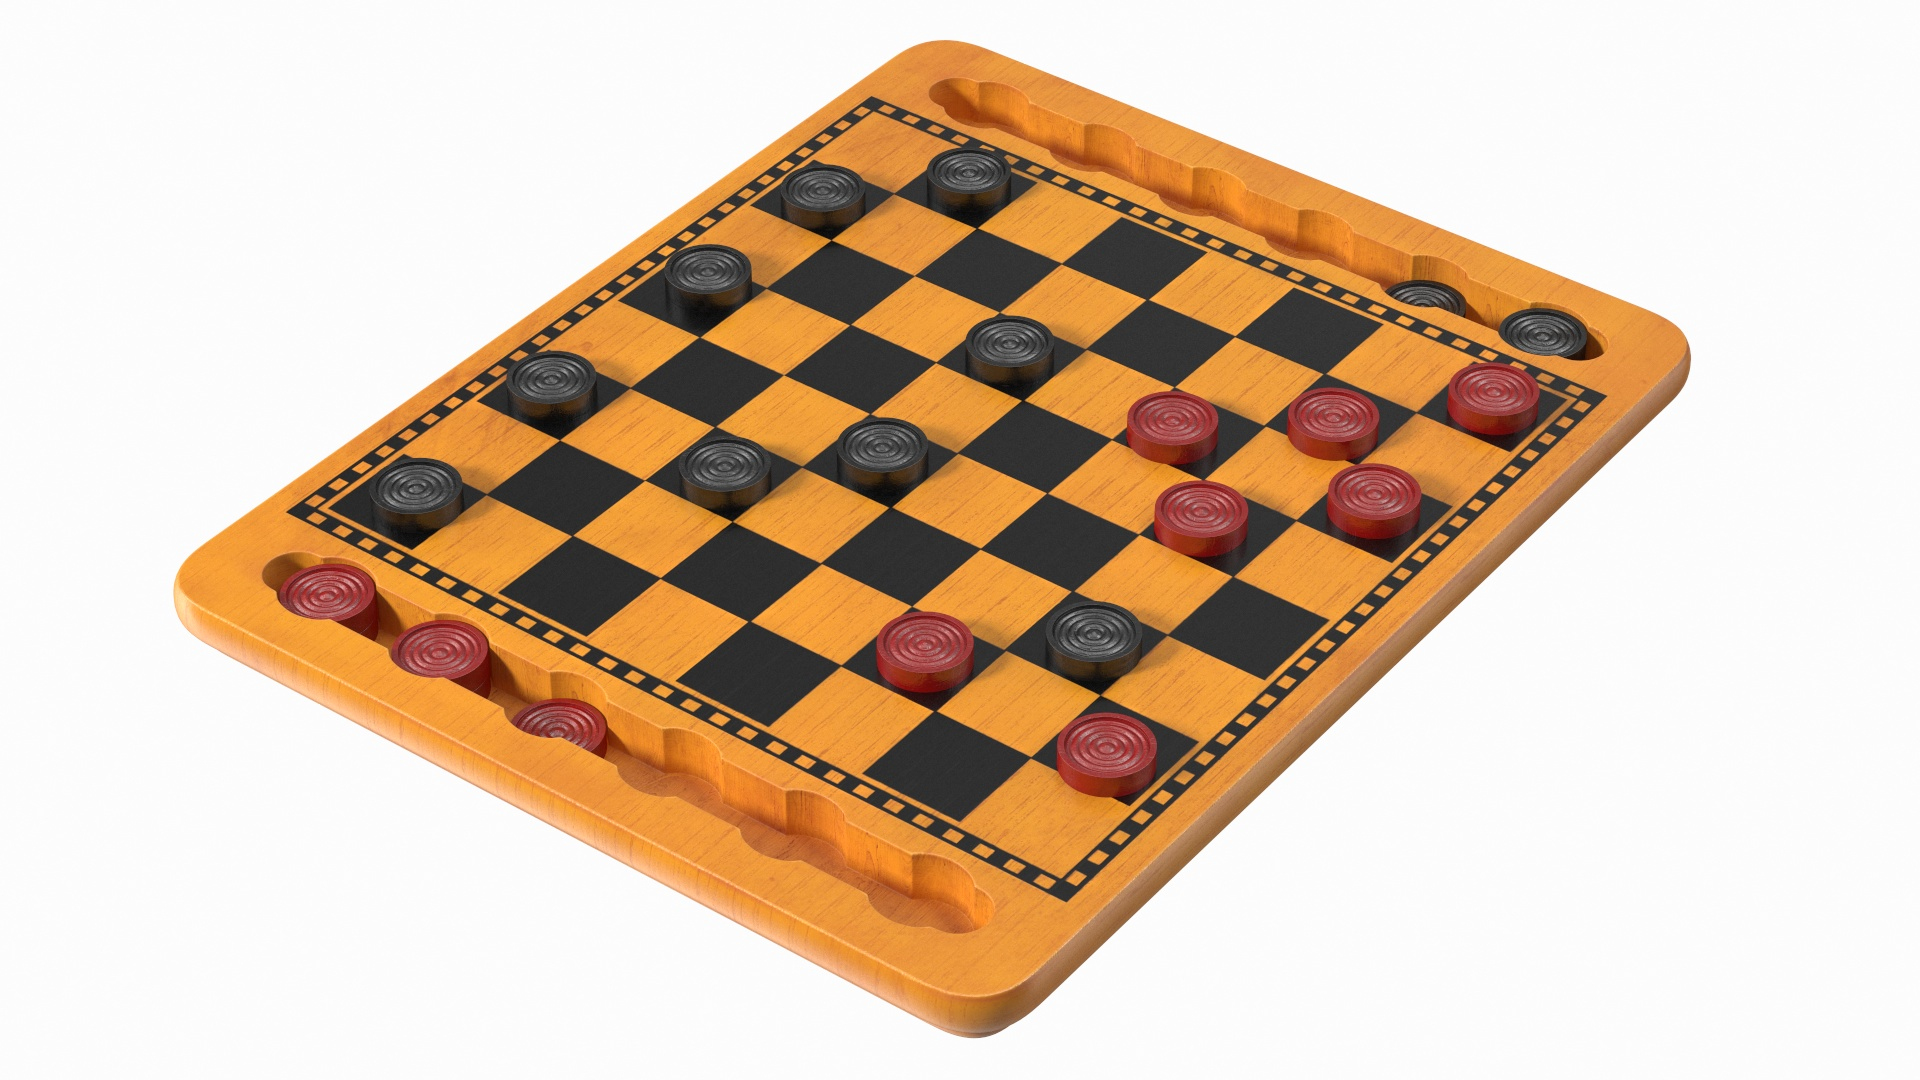  Legler Chess and Backgammon Children's Game : Toys & Games